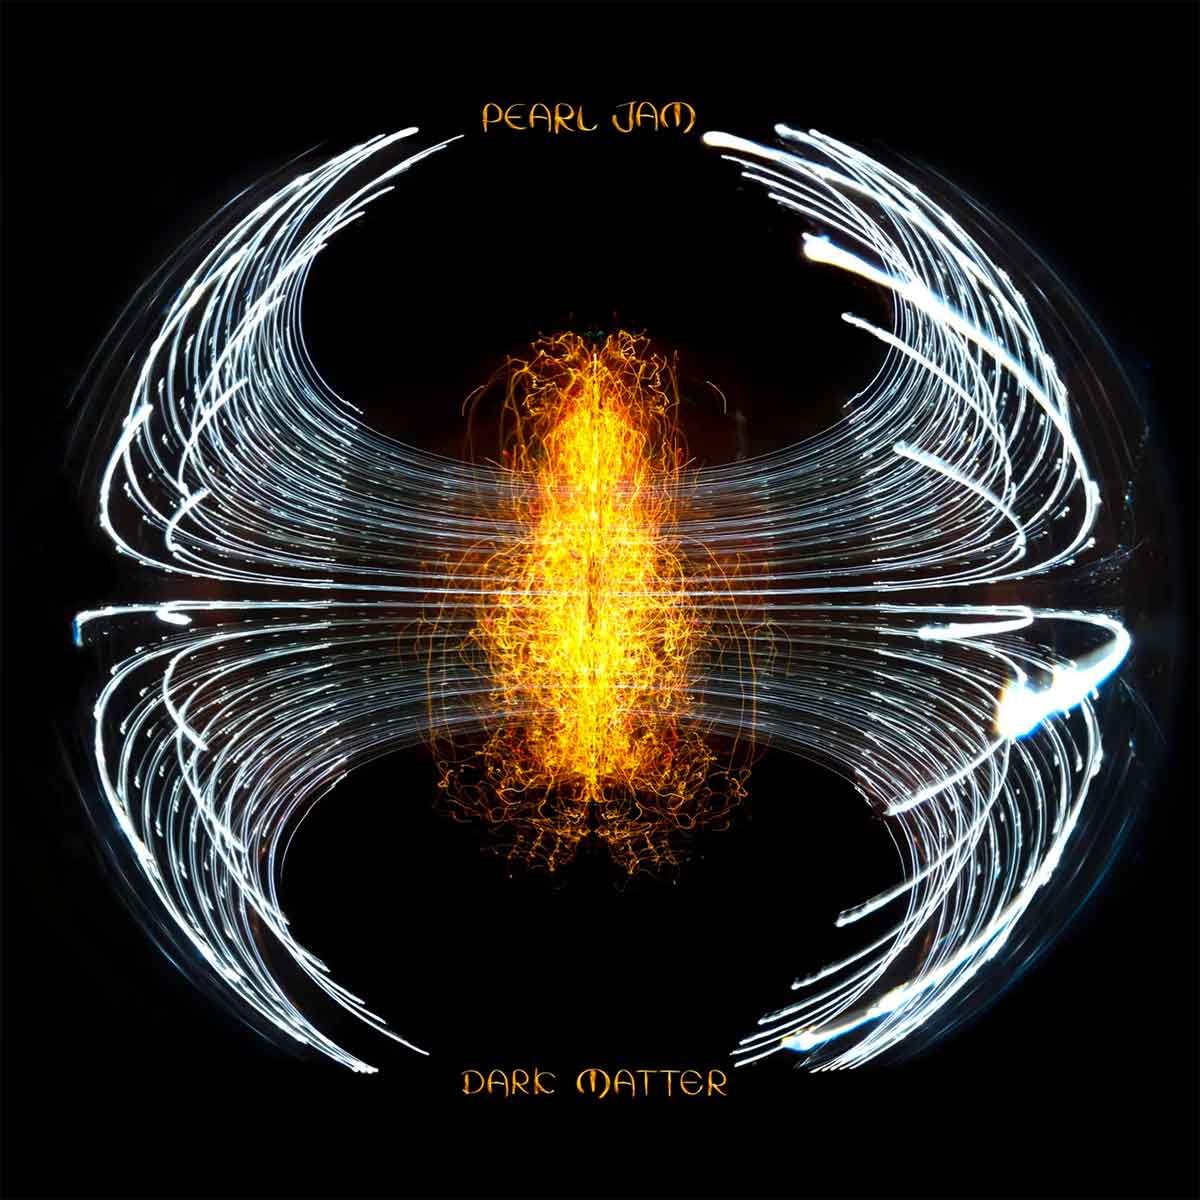 Tapa de Dark Matter, álbum de Pearl Jam